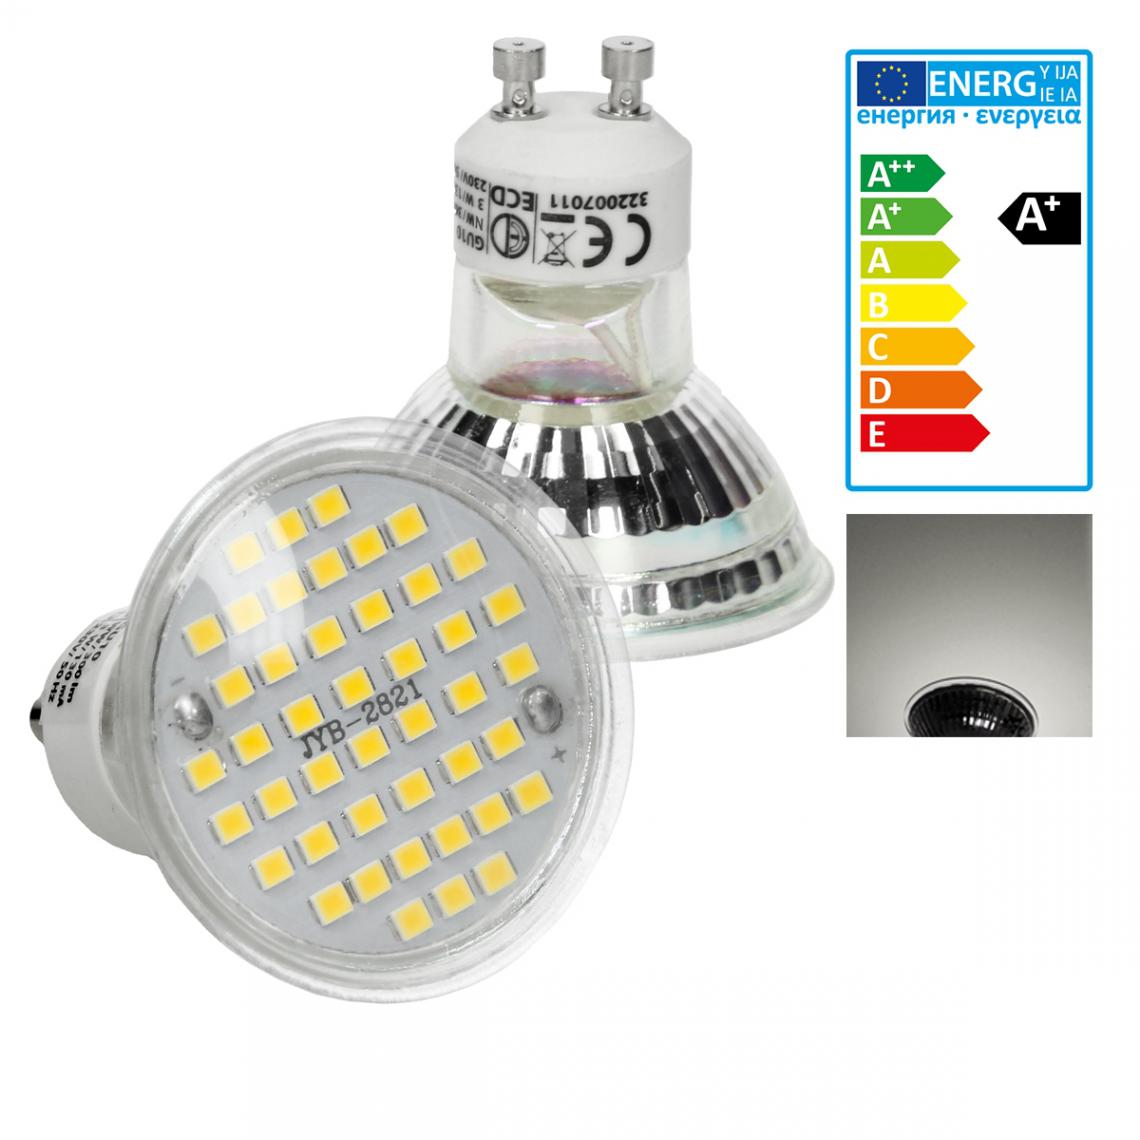 Ecd Germany - ECD Germany 20 x LED GU10 44SMD Spot 3W - Lampe à LED 20W - en verre - 251 lumens - Blanc neutre 4000K - Spot à encastrer - Ampoules LED